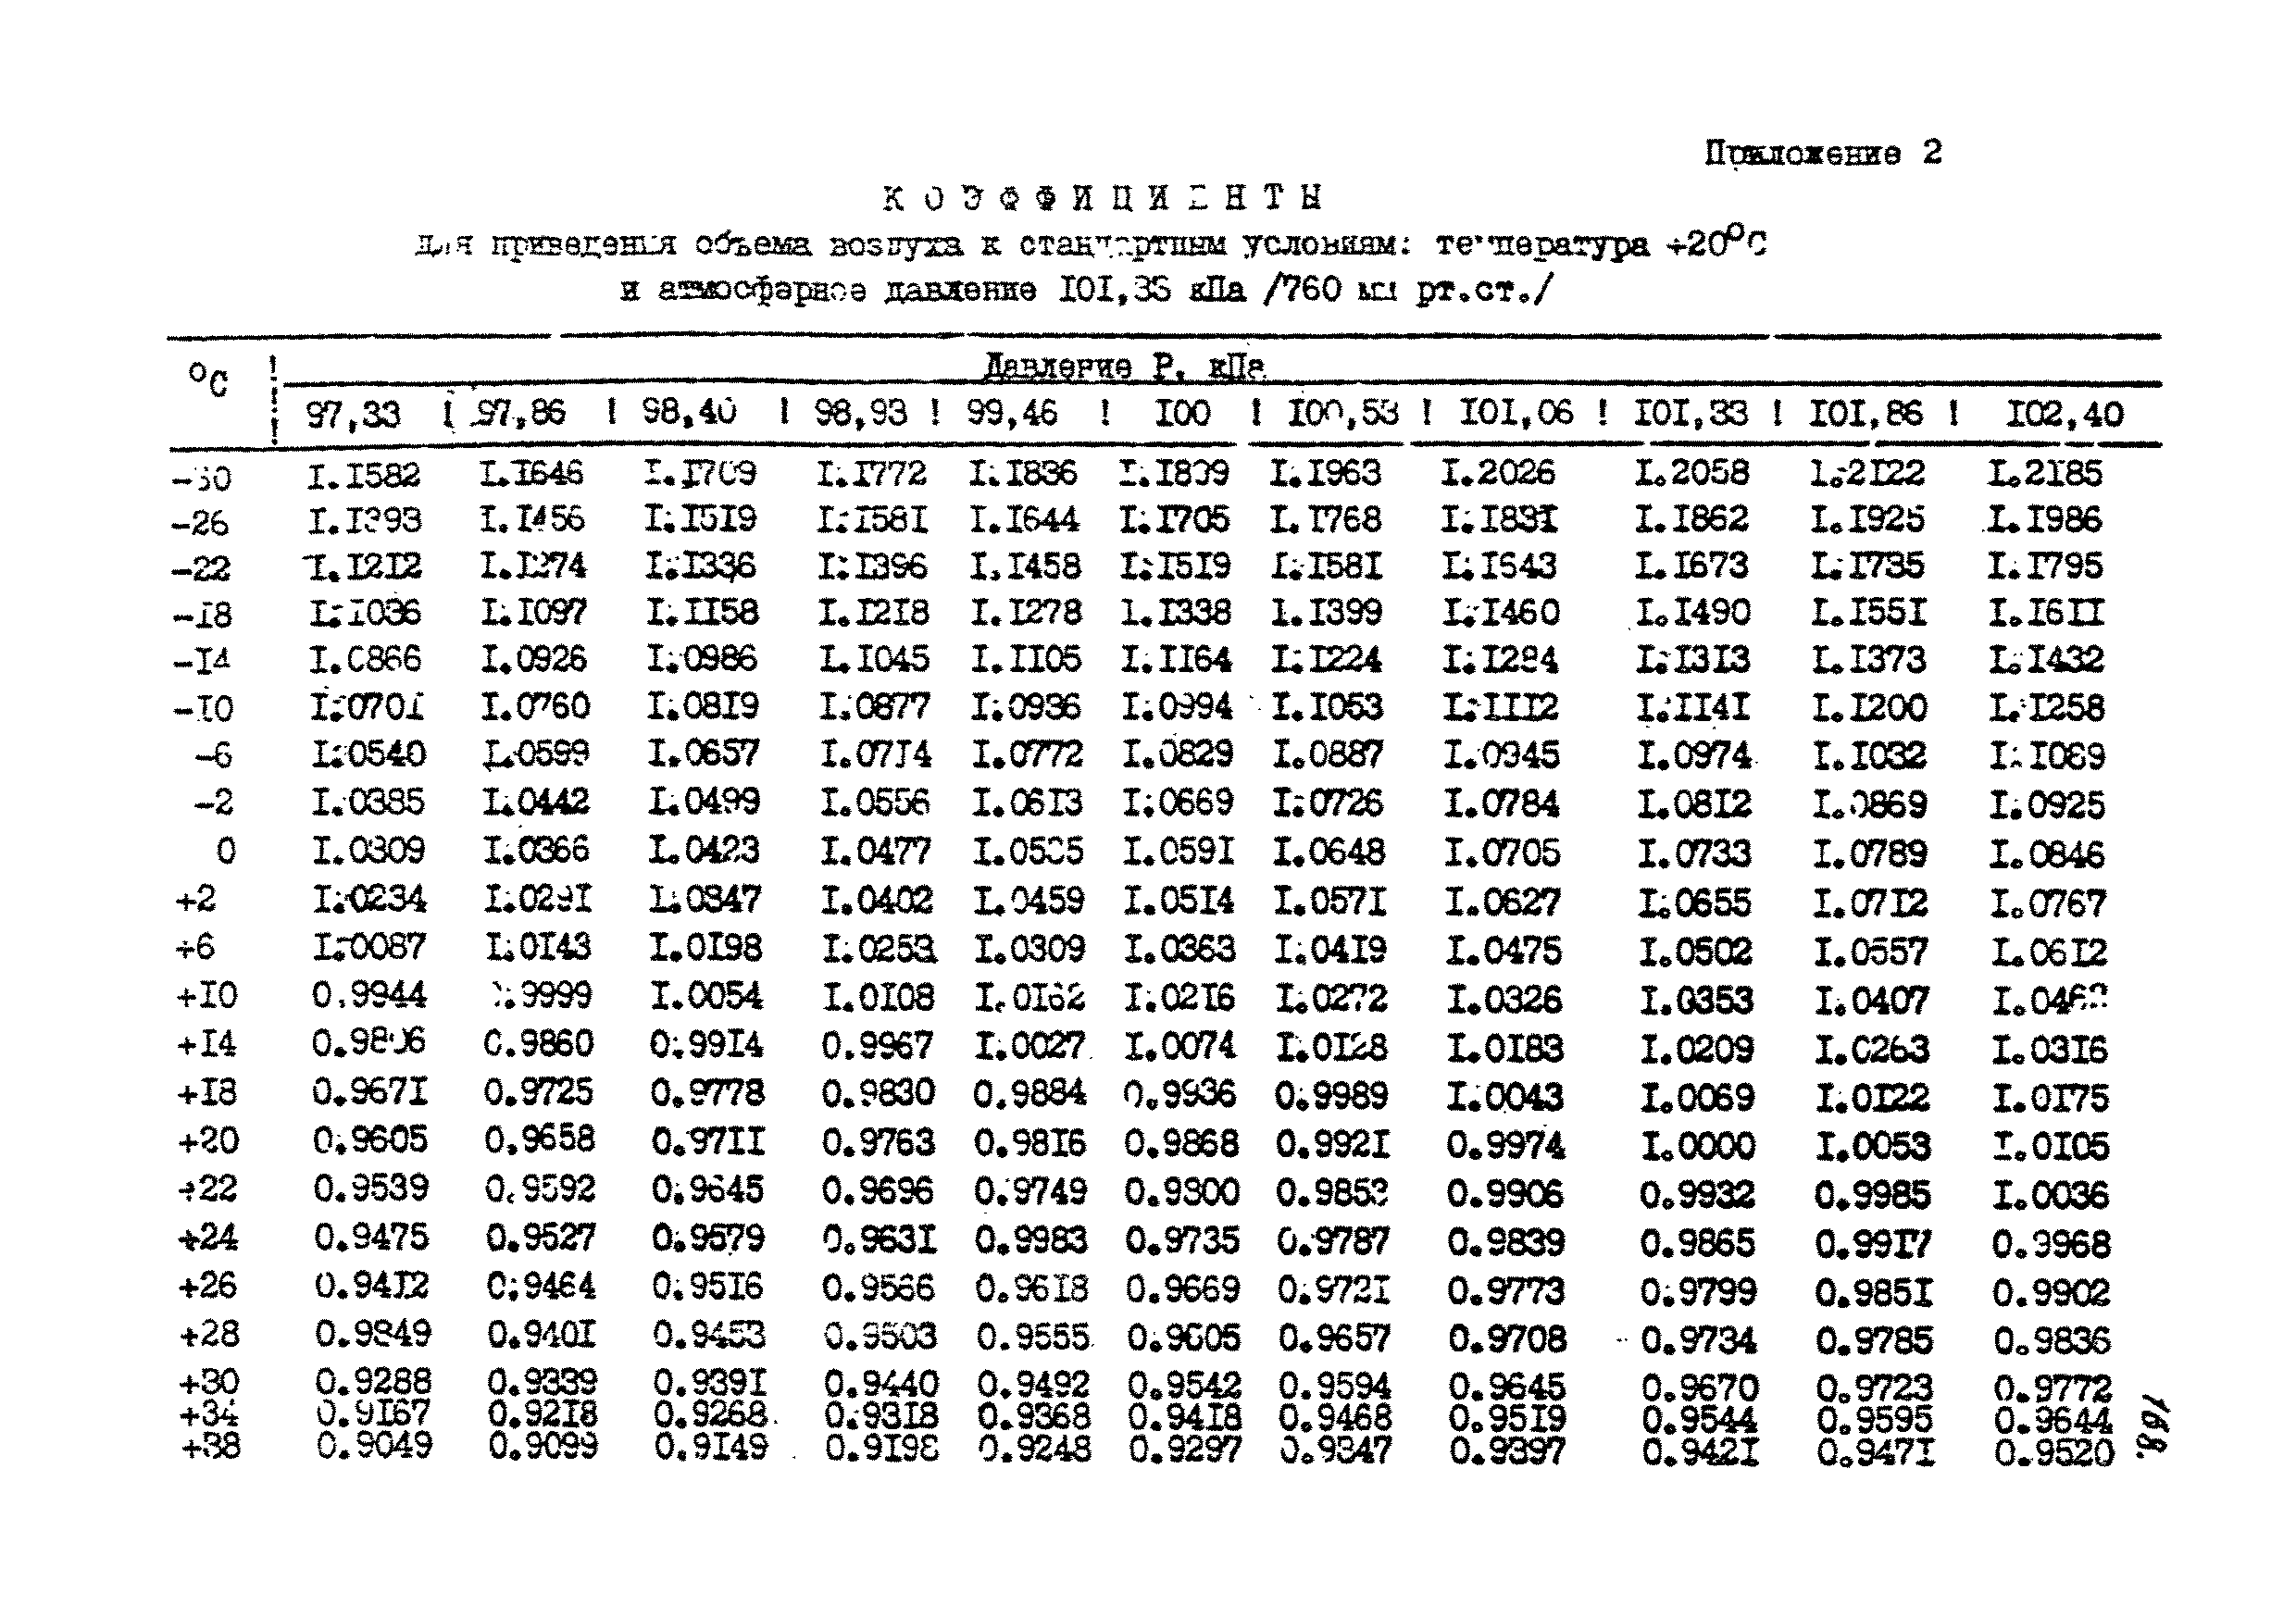 МУ 2748-83